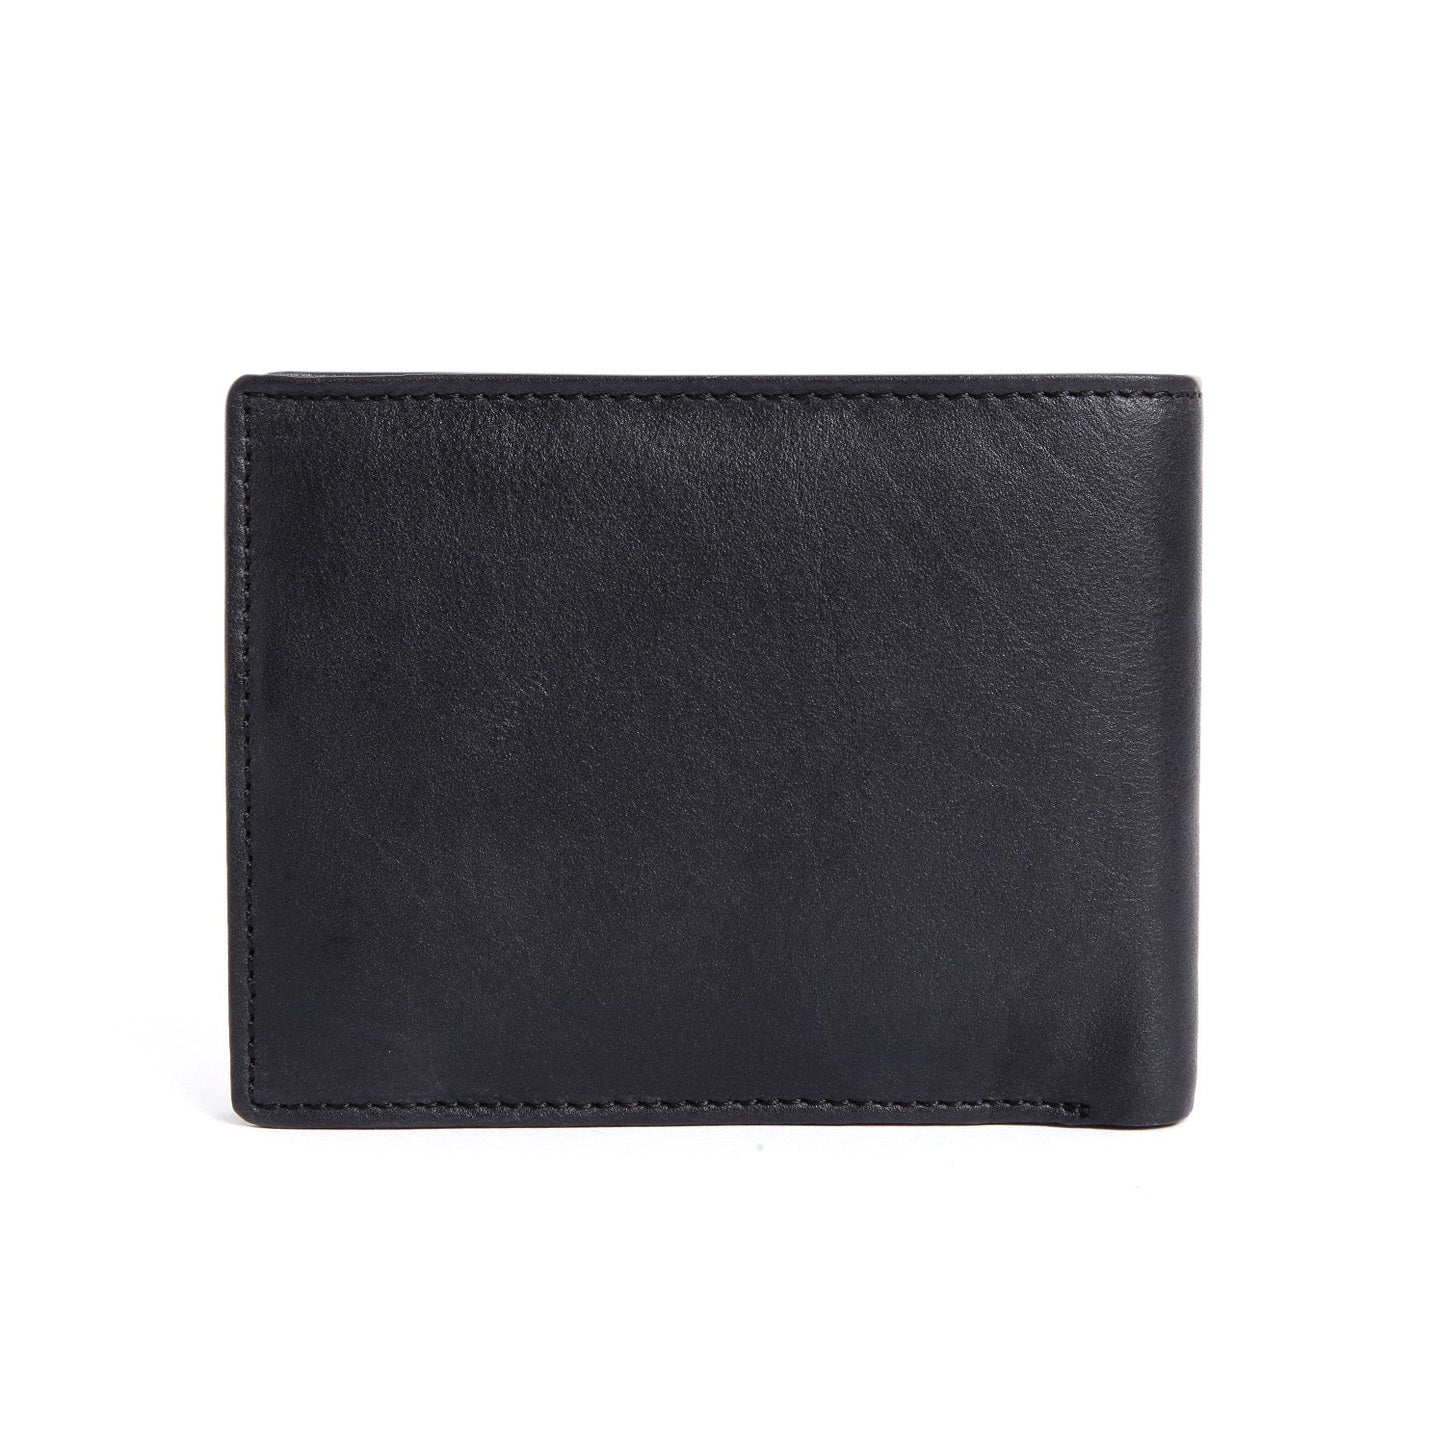 Black Colour Bi-Fold Italian Leather Slim Wallet ( 2 Card Slot + 2 Hidden Compartment +1 ID Slot + Coin Pocket +  Cash Compartment )